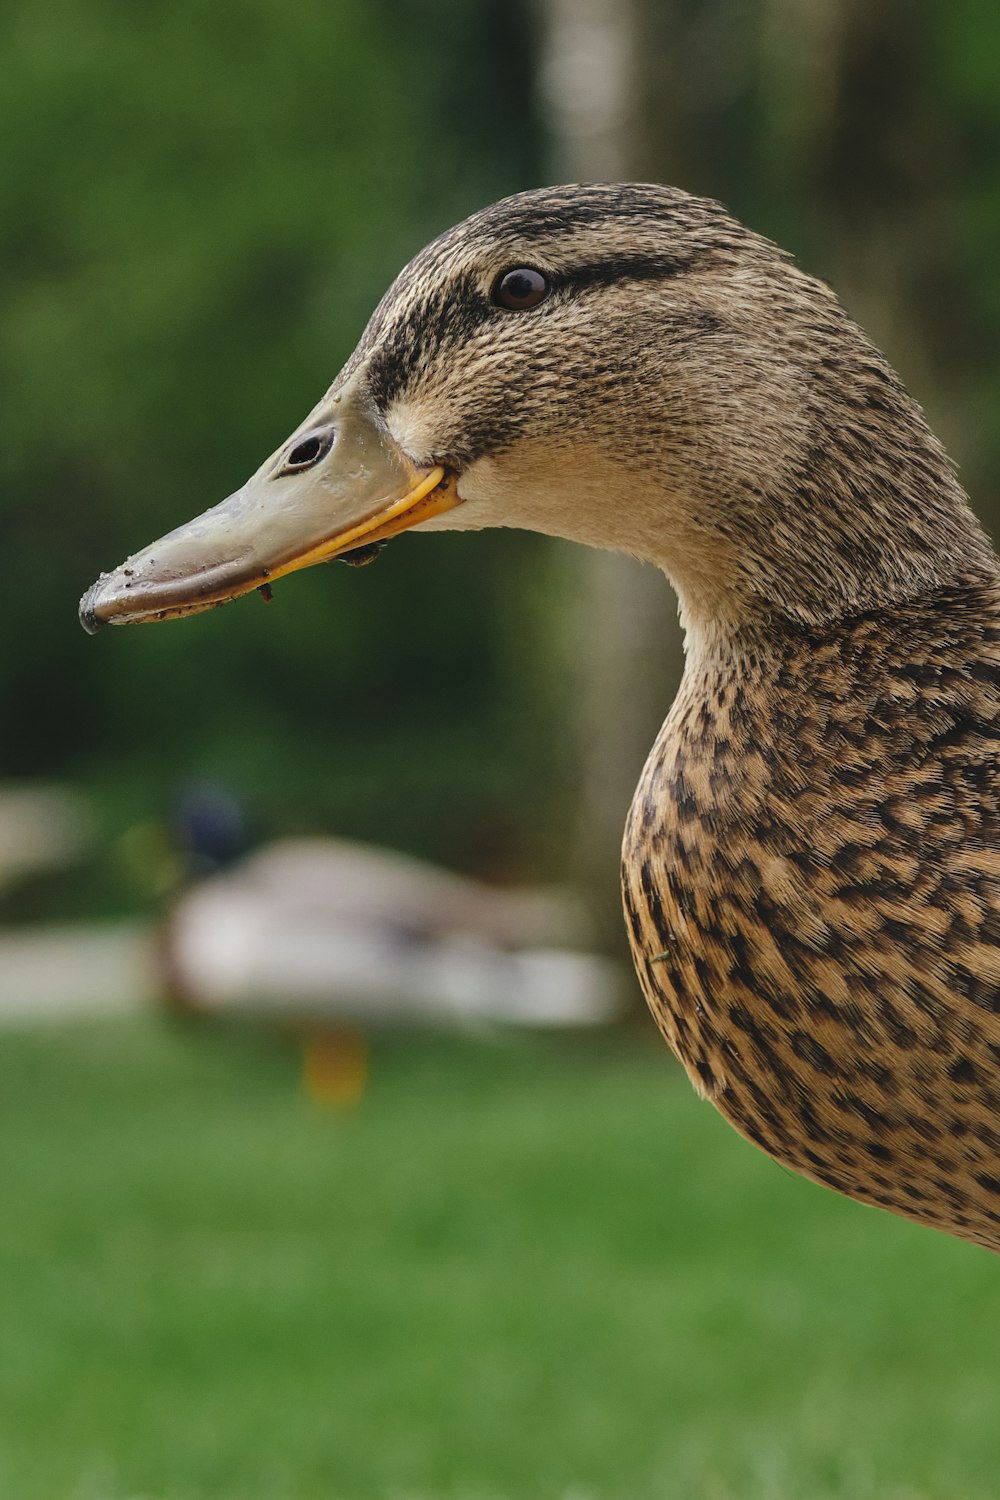 a close up of a duck on a grass field